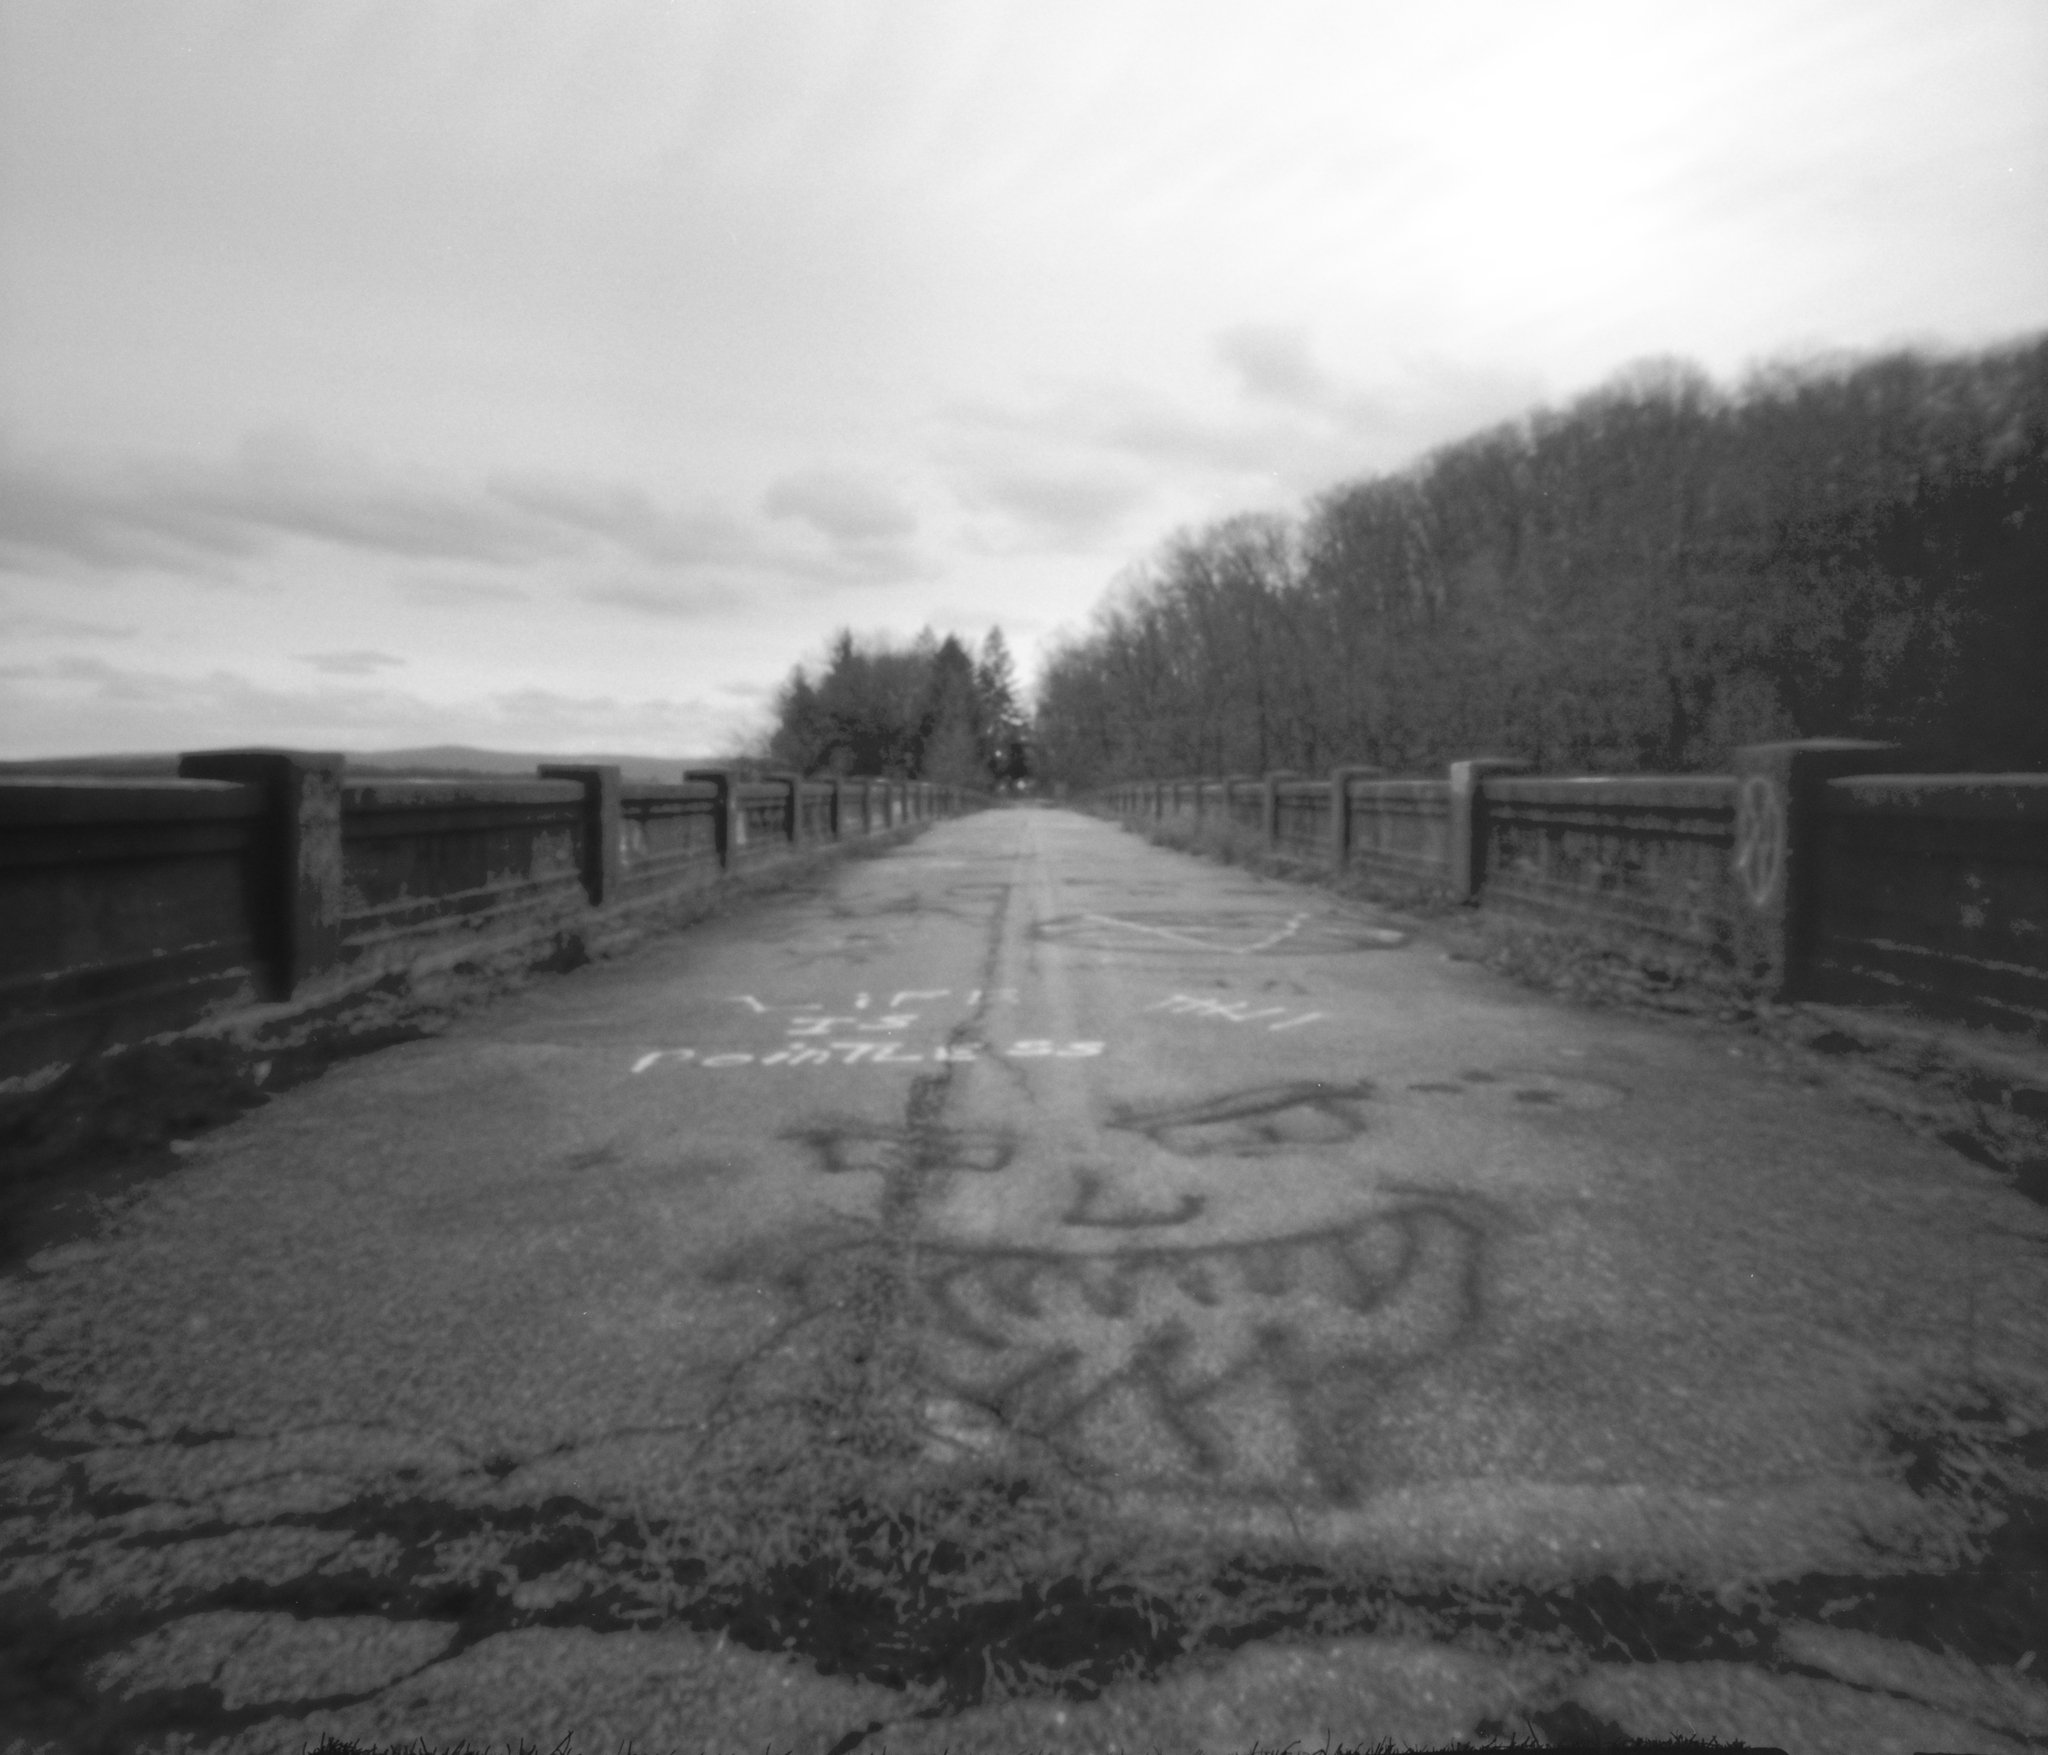  Lake Ontelaunee abandoned West Shore Bridge.&nbsp; Ontelaunee Township, Pennsylvania.&nbsp; Zero Image 6x9 using 6x7 mode.&nbsp; 